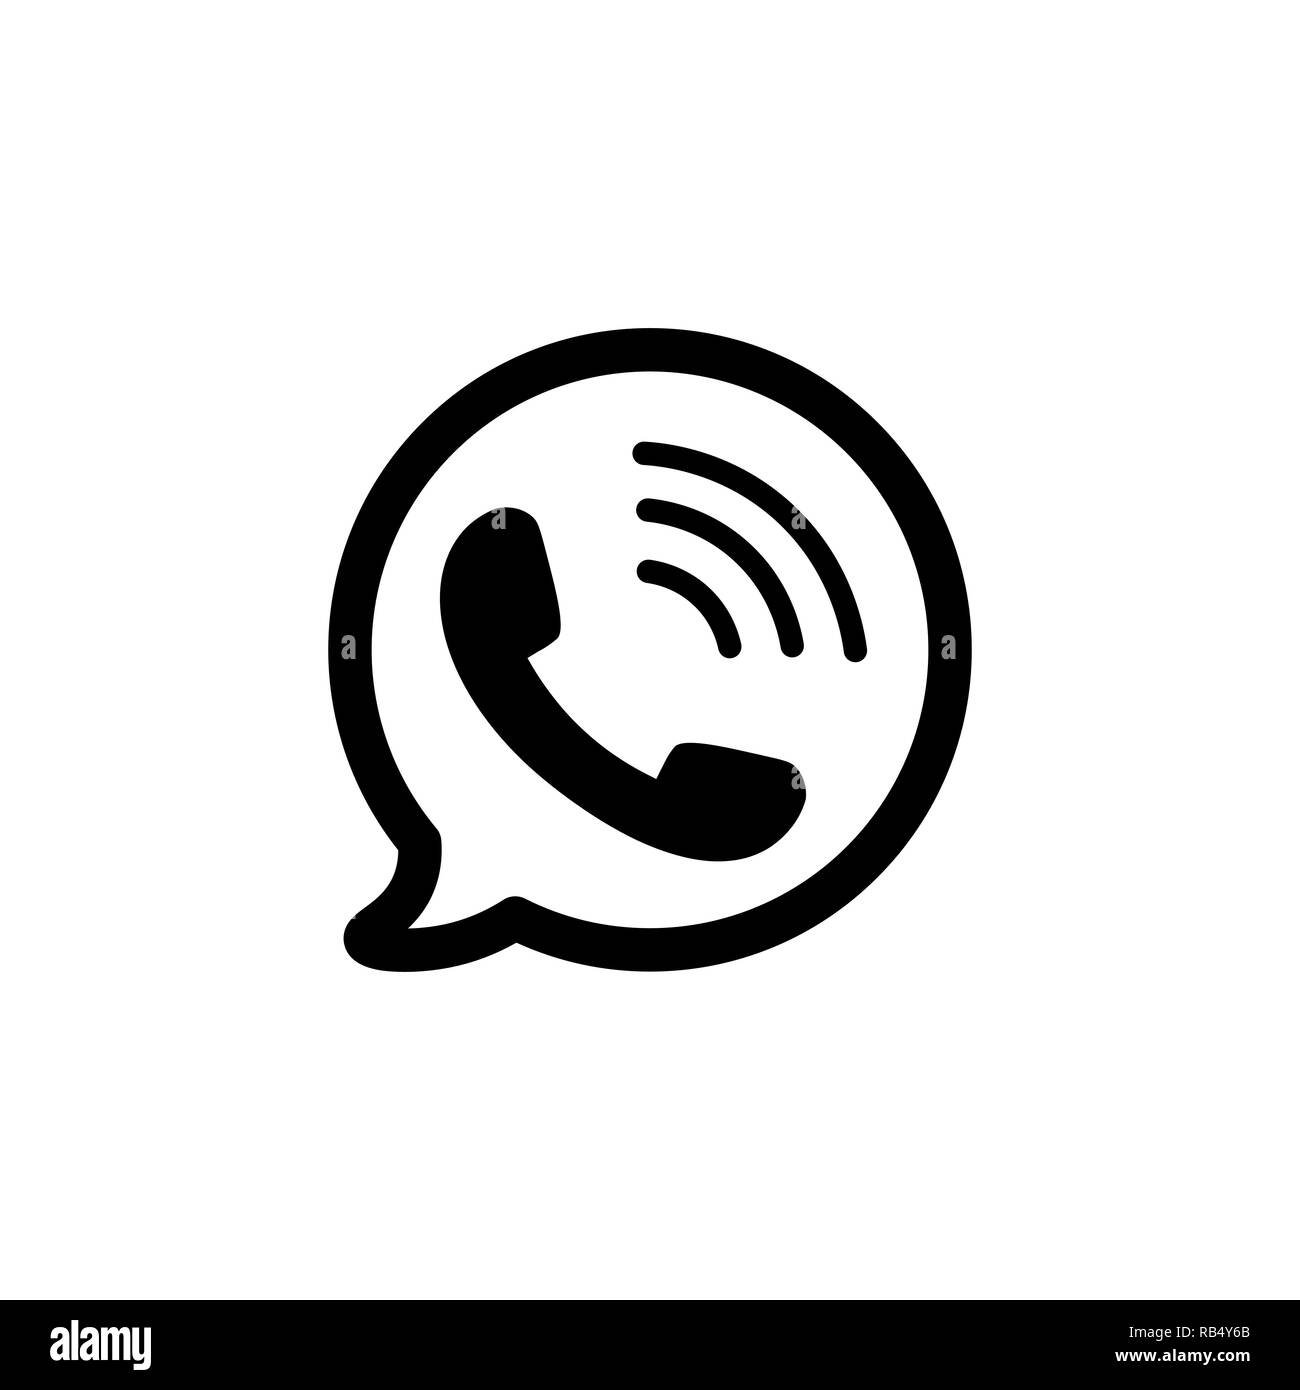 phone symbol white